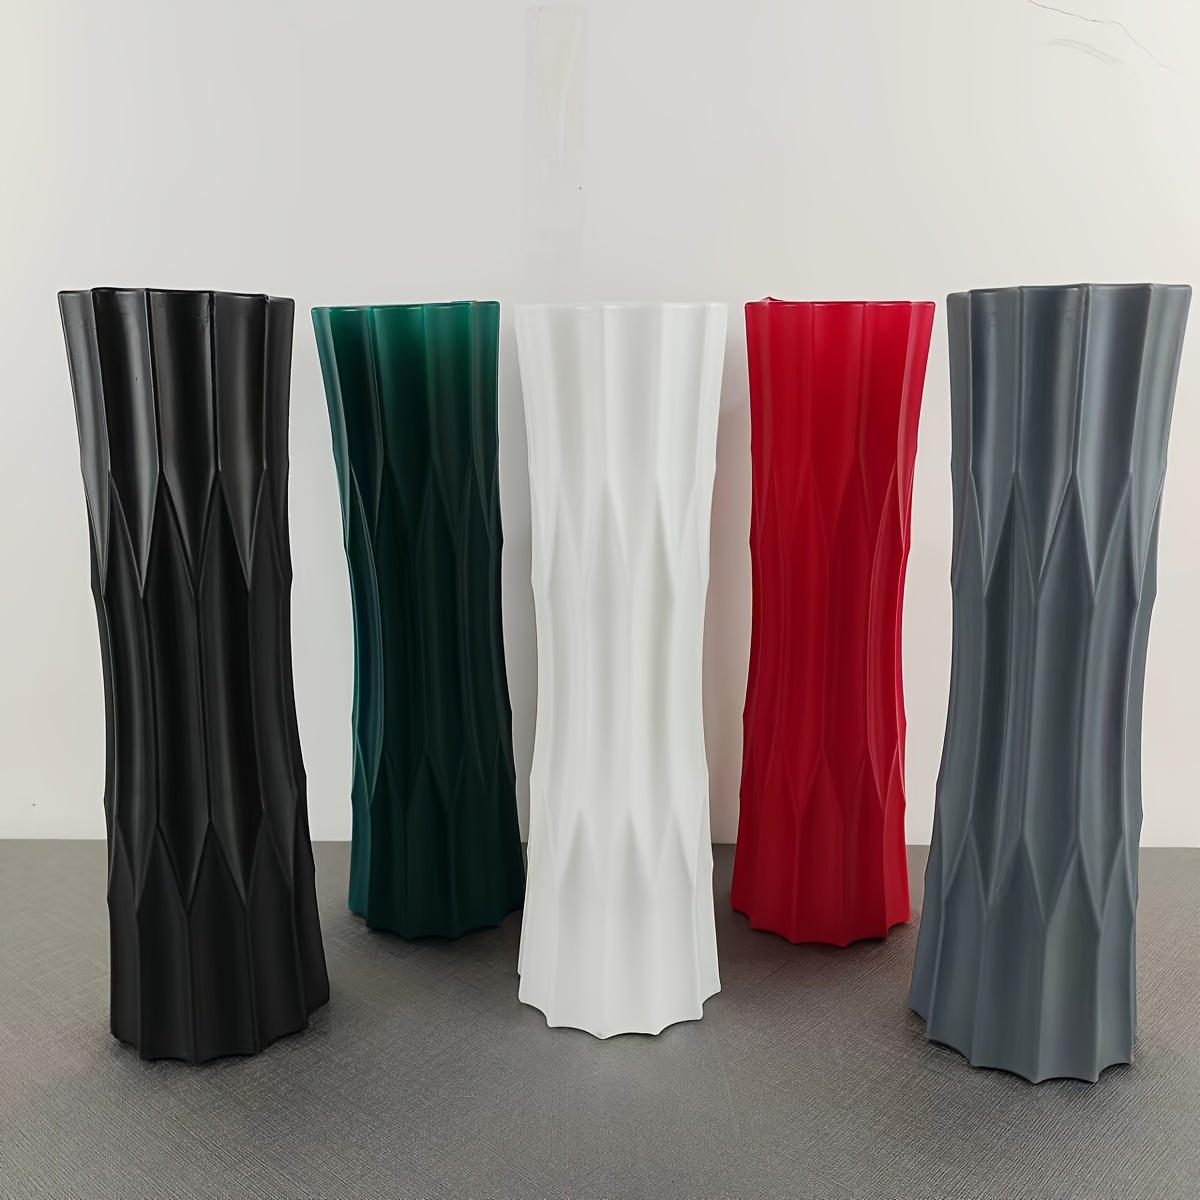 

Elegant Ceramic-look Plastic Vase - Perfect For Hydroponics & Flower Arrangements, Ideal For Home Decor